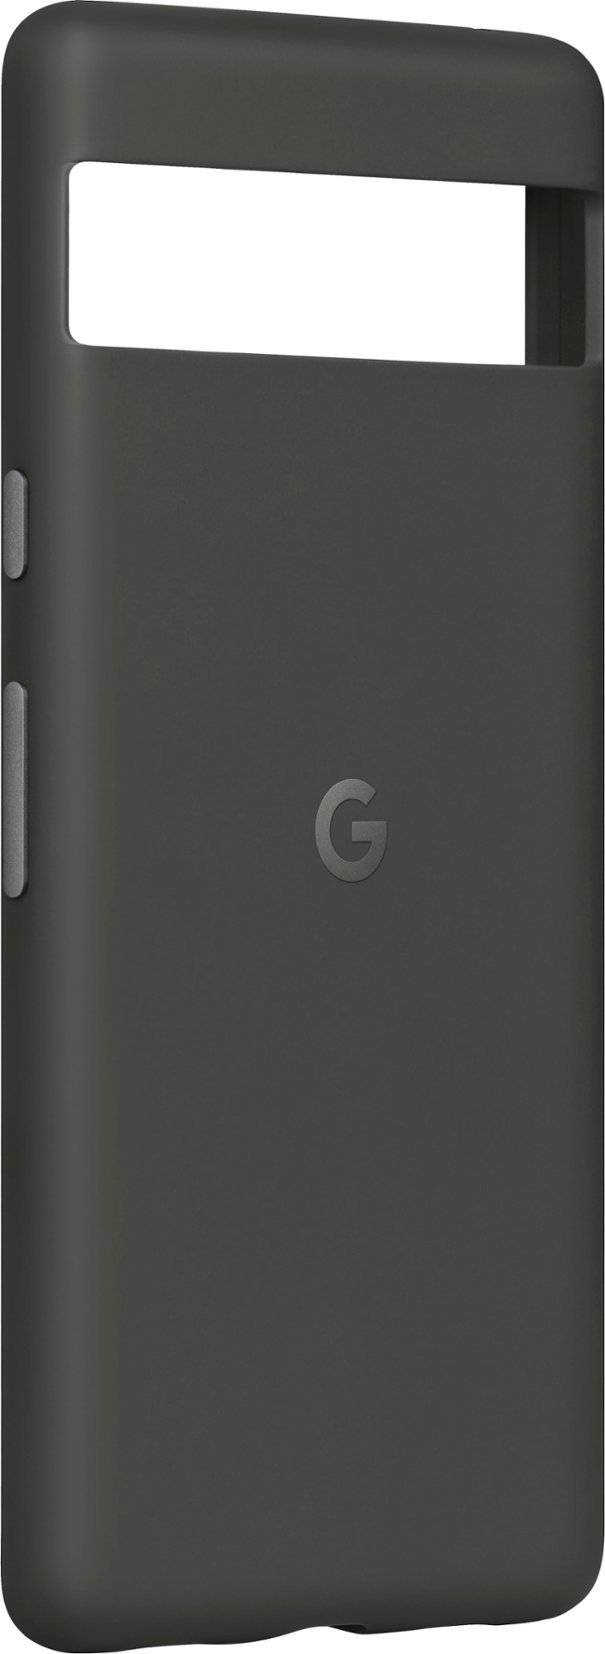 Google - Pixel 7a Case - Charcoal-Charcoal